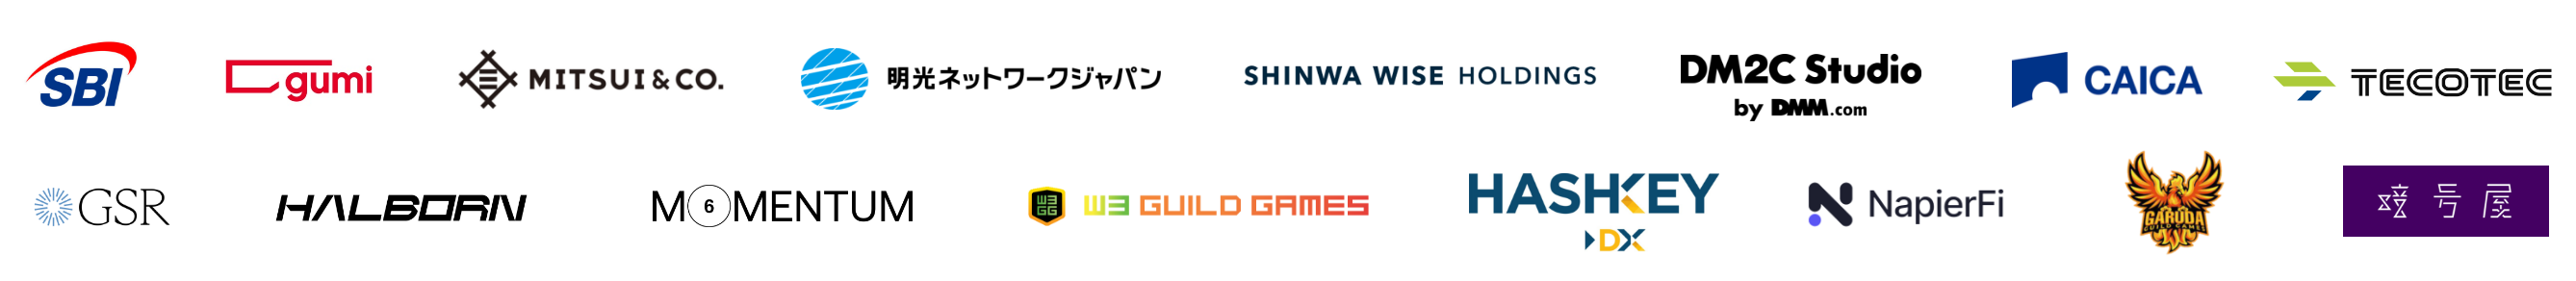 SBI/gumi/MITSUI&CO/SHINWA WISE HOLDINGS/DM2C Studio/CAICA/TECOTEC/GSR/HALBORN/MOMENTUM/W3 GUILD GAMES/HASHKEY/NapierFi/GARUDA GUILD GAMES